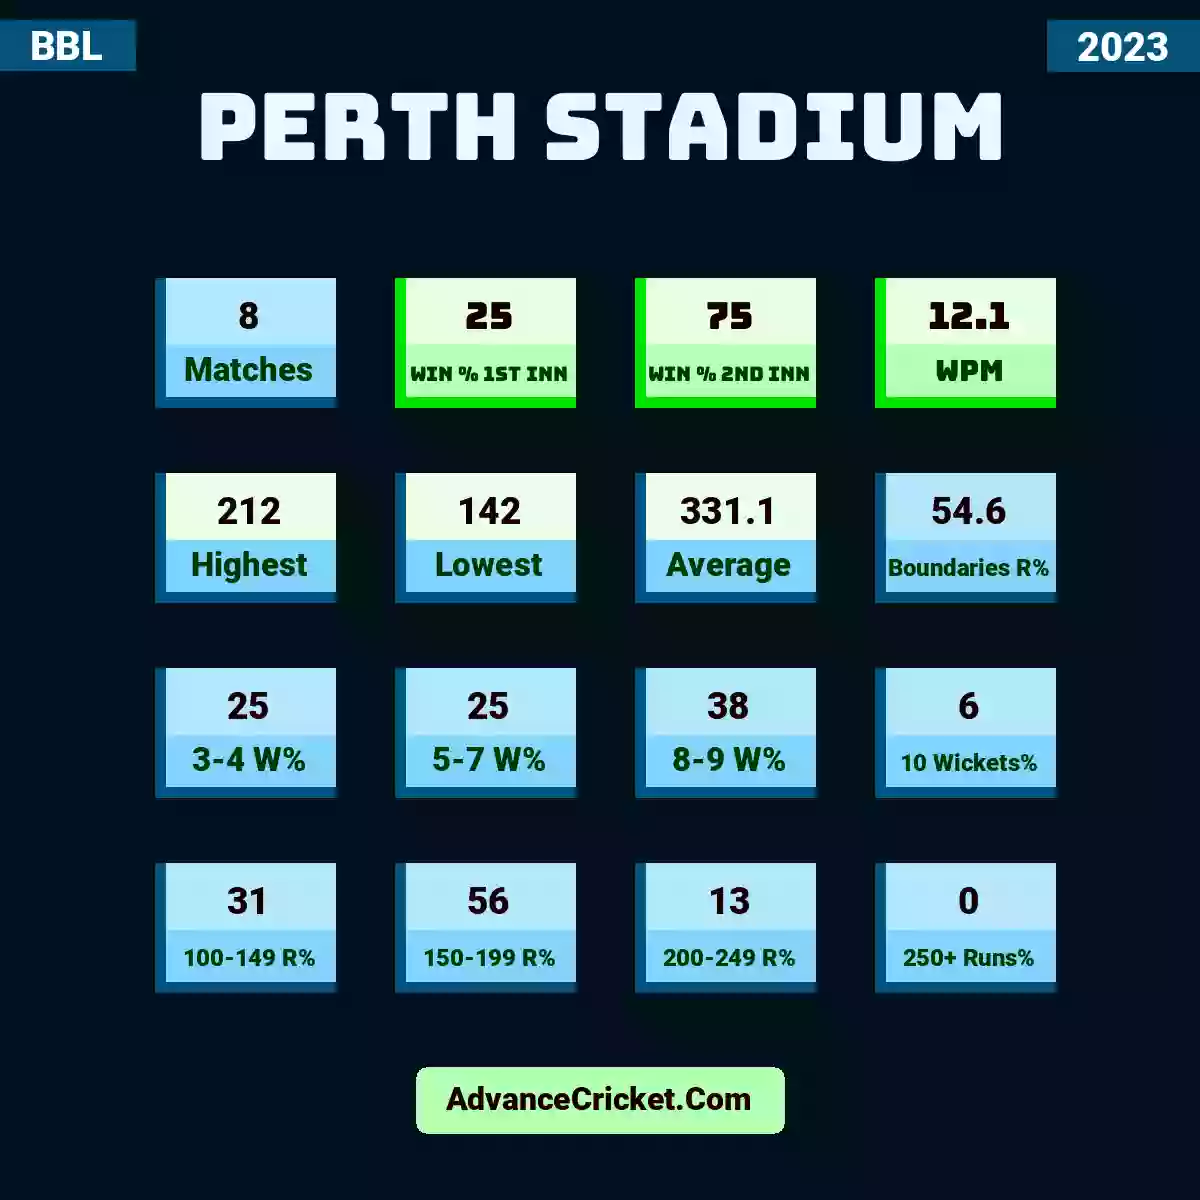 Image showing Perth Stadium with Matches: 8, Win % 1st Inn: 25, Win % 2nd Inn: 75, WPM: 12.1, Highest: 212, Lowest: 142, Average: 331.1, Boundaries R%: 54.6, 3-4 W%: 25, 5-7 W%: 25, 8-9 W%: 38, 10 Wickets%: 6, 100-149 R%: 31, 150-199 R%: 56, 200-249 R%: 13, 250+ Runs%: 0.